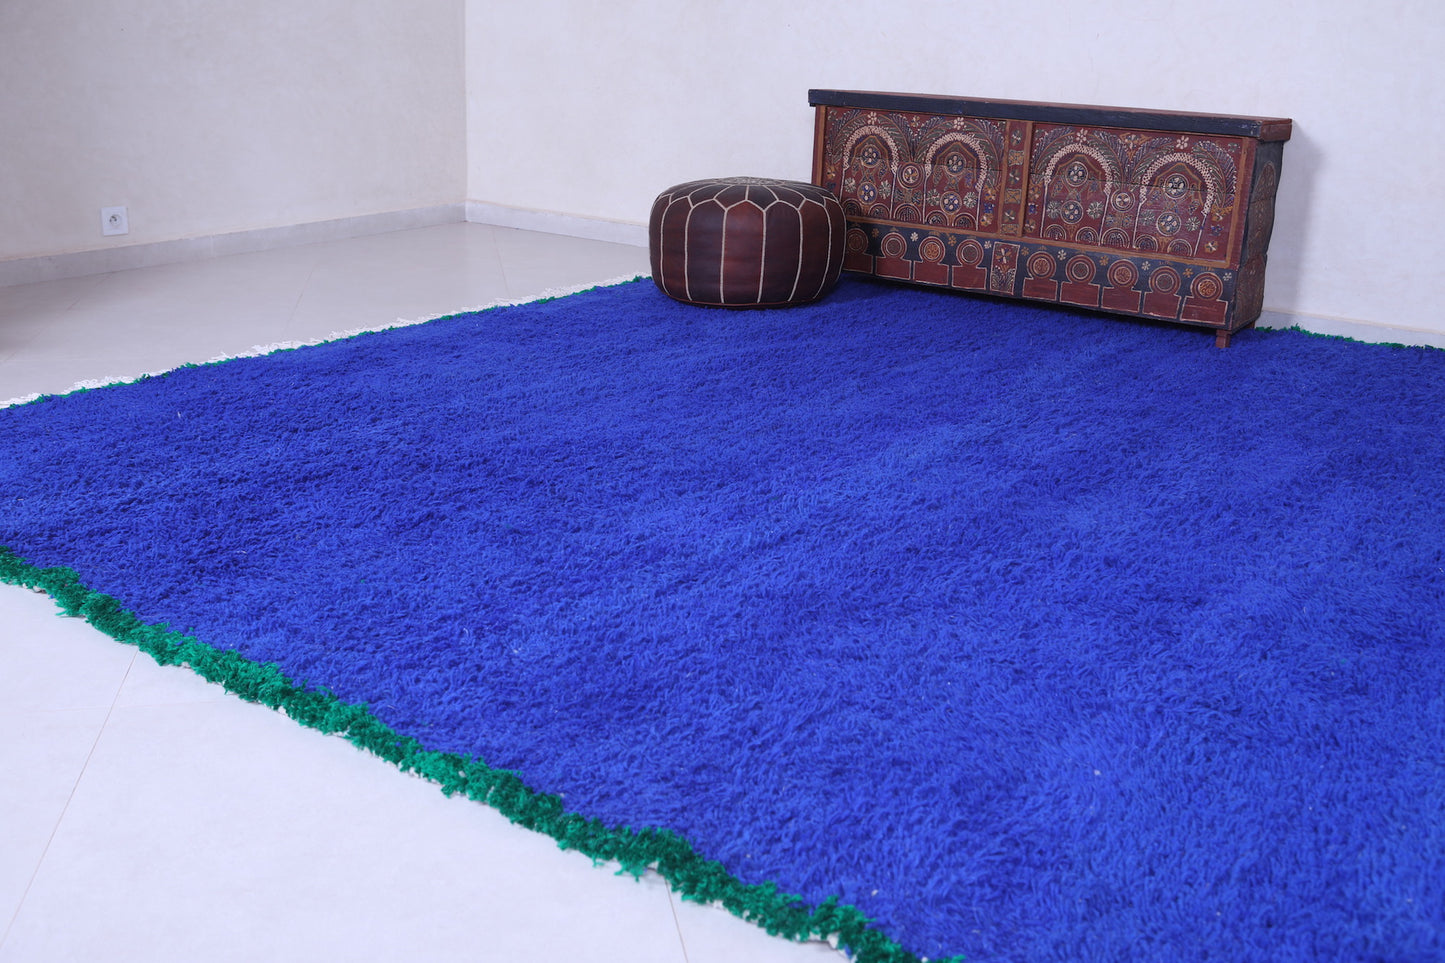 Shag Moroccan blue rug - Plain Moroccan blue rug - Custom Rug